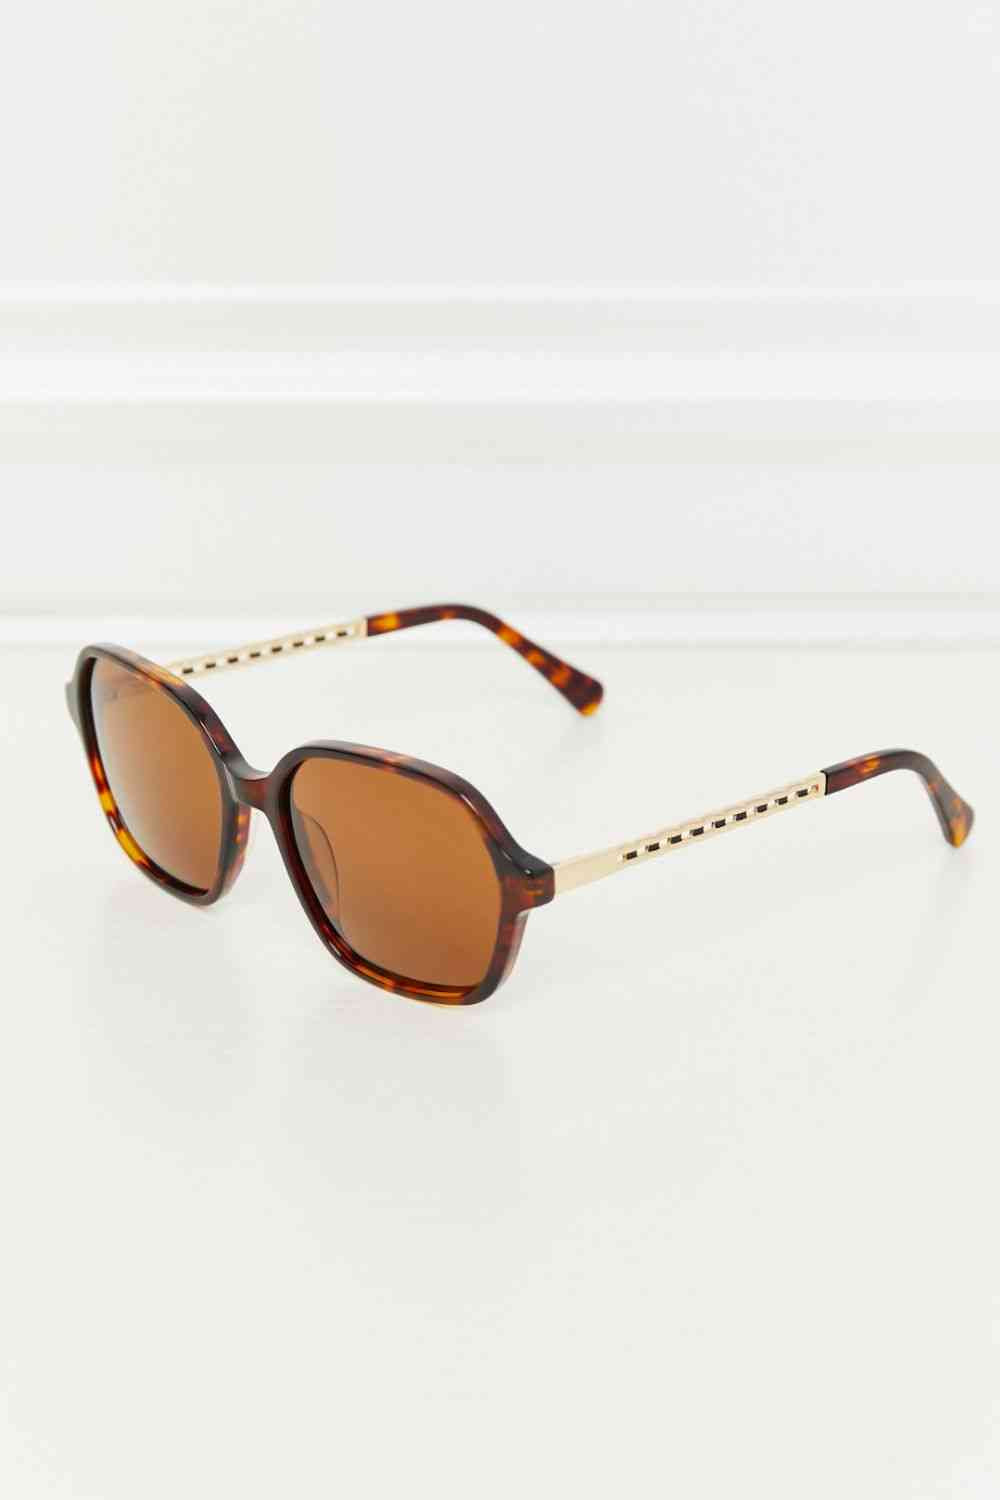 TAC Polarization Lens Full Rim Sunglasses Chestnut One Size